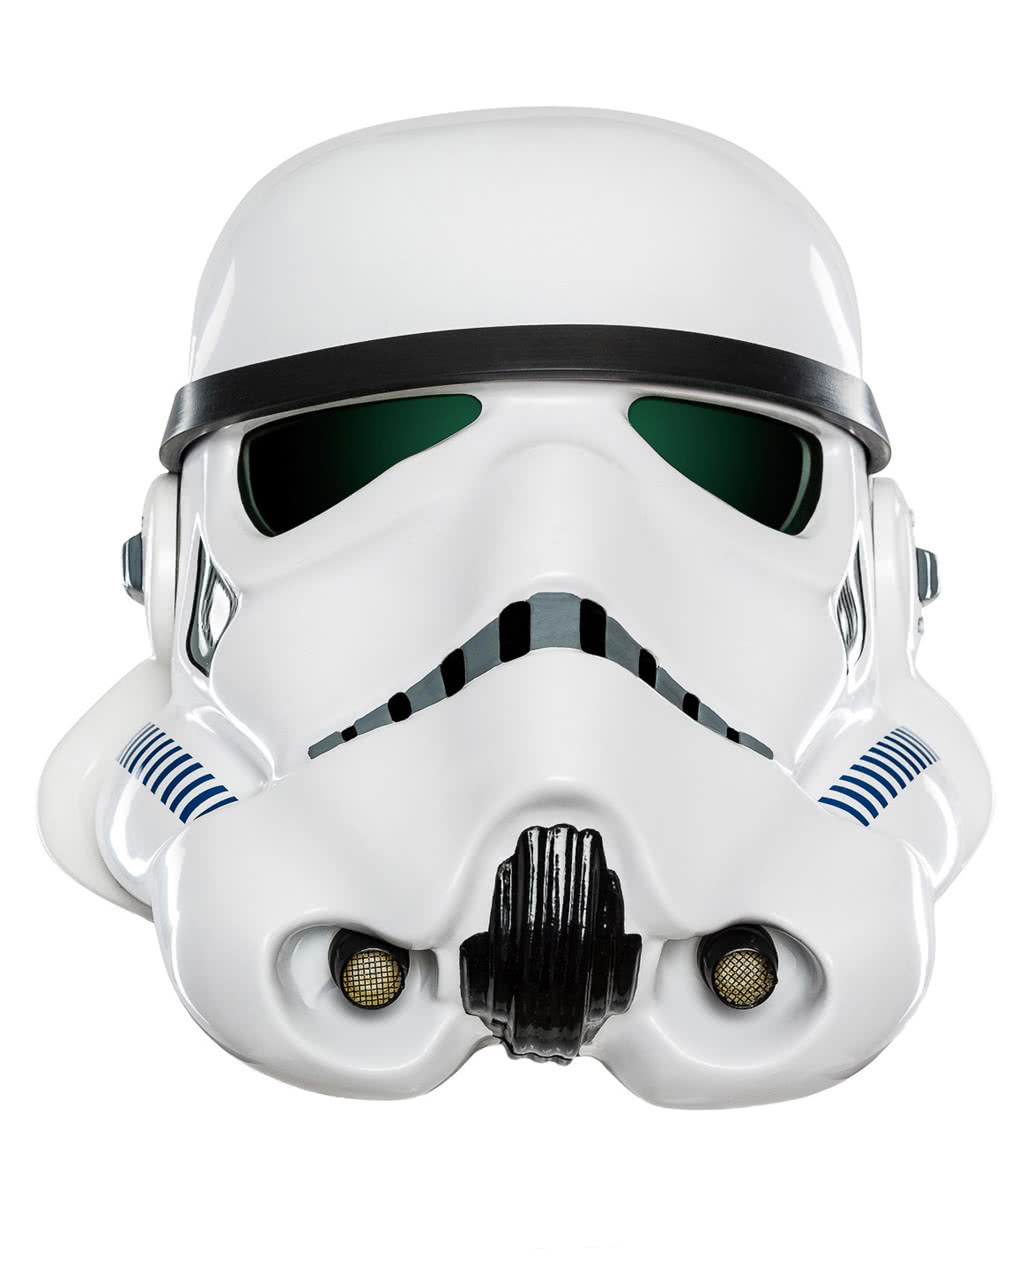 Star wars helmets replicas for sale